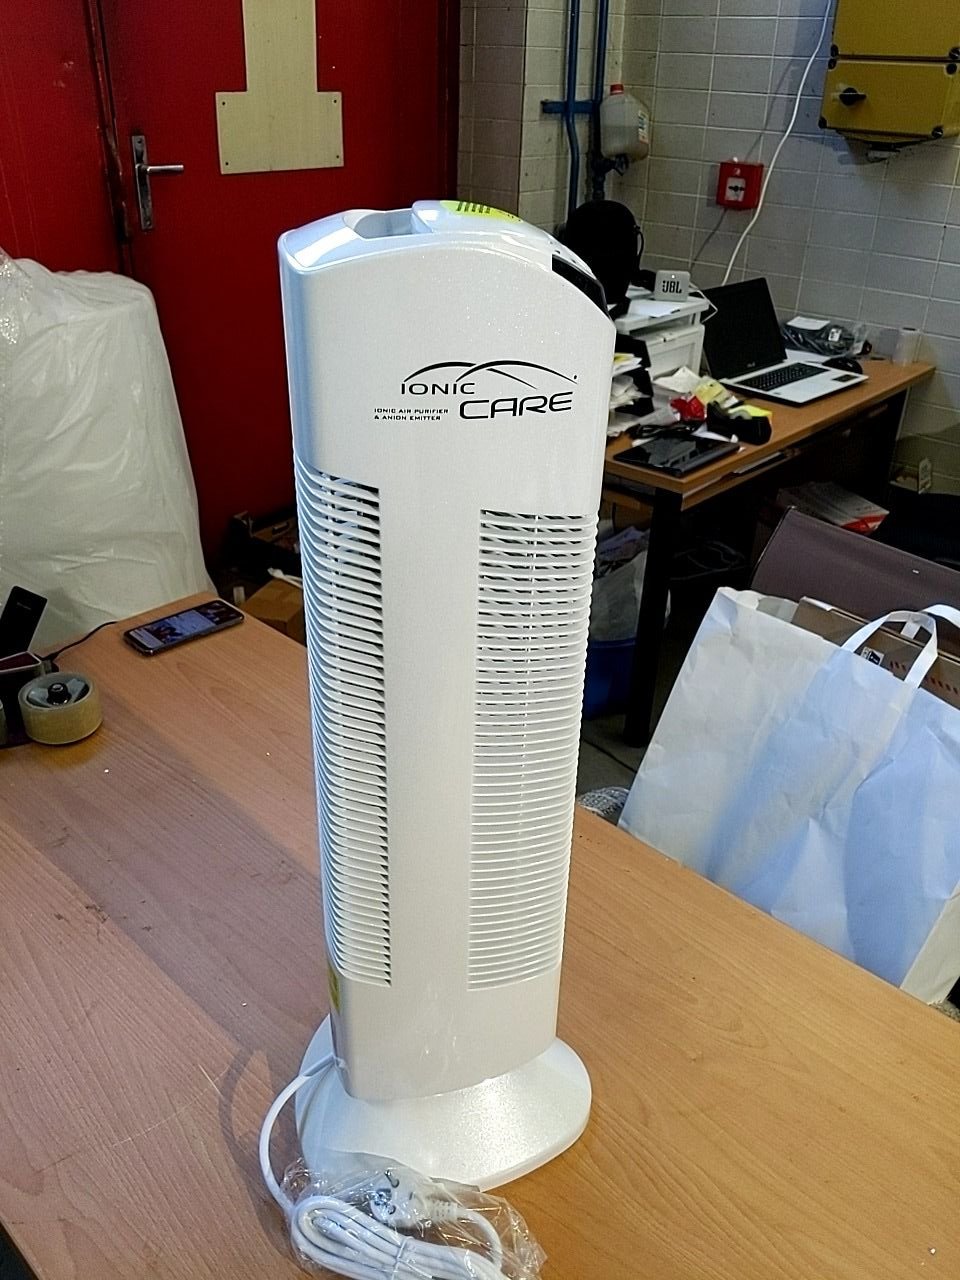 Kombinovaná čistička vzduchu s generátorem záporných iontů Ionic care Triton X6